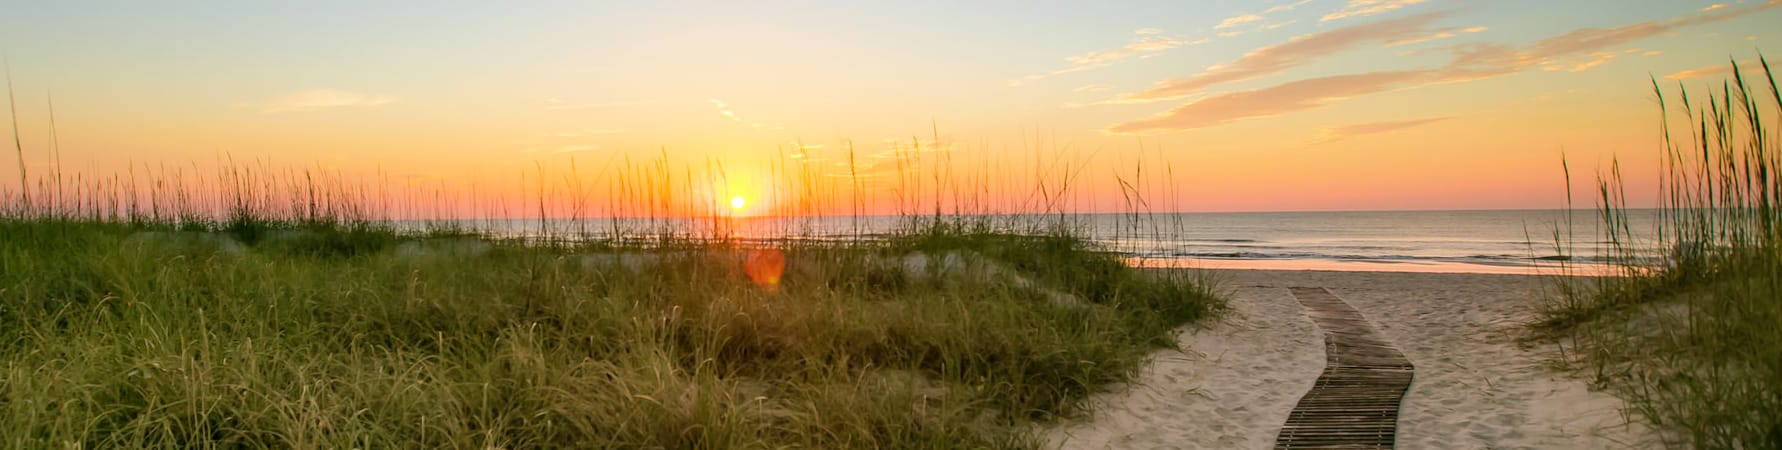 Top 5 Things to Do on Amelia Island and Fernandina Beach